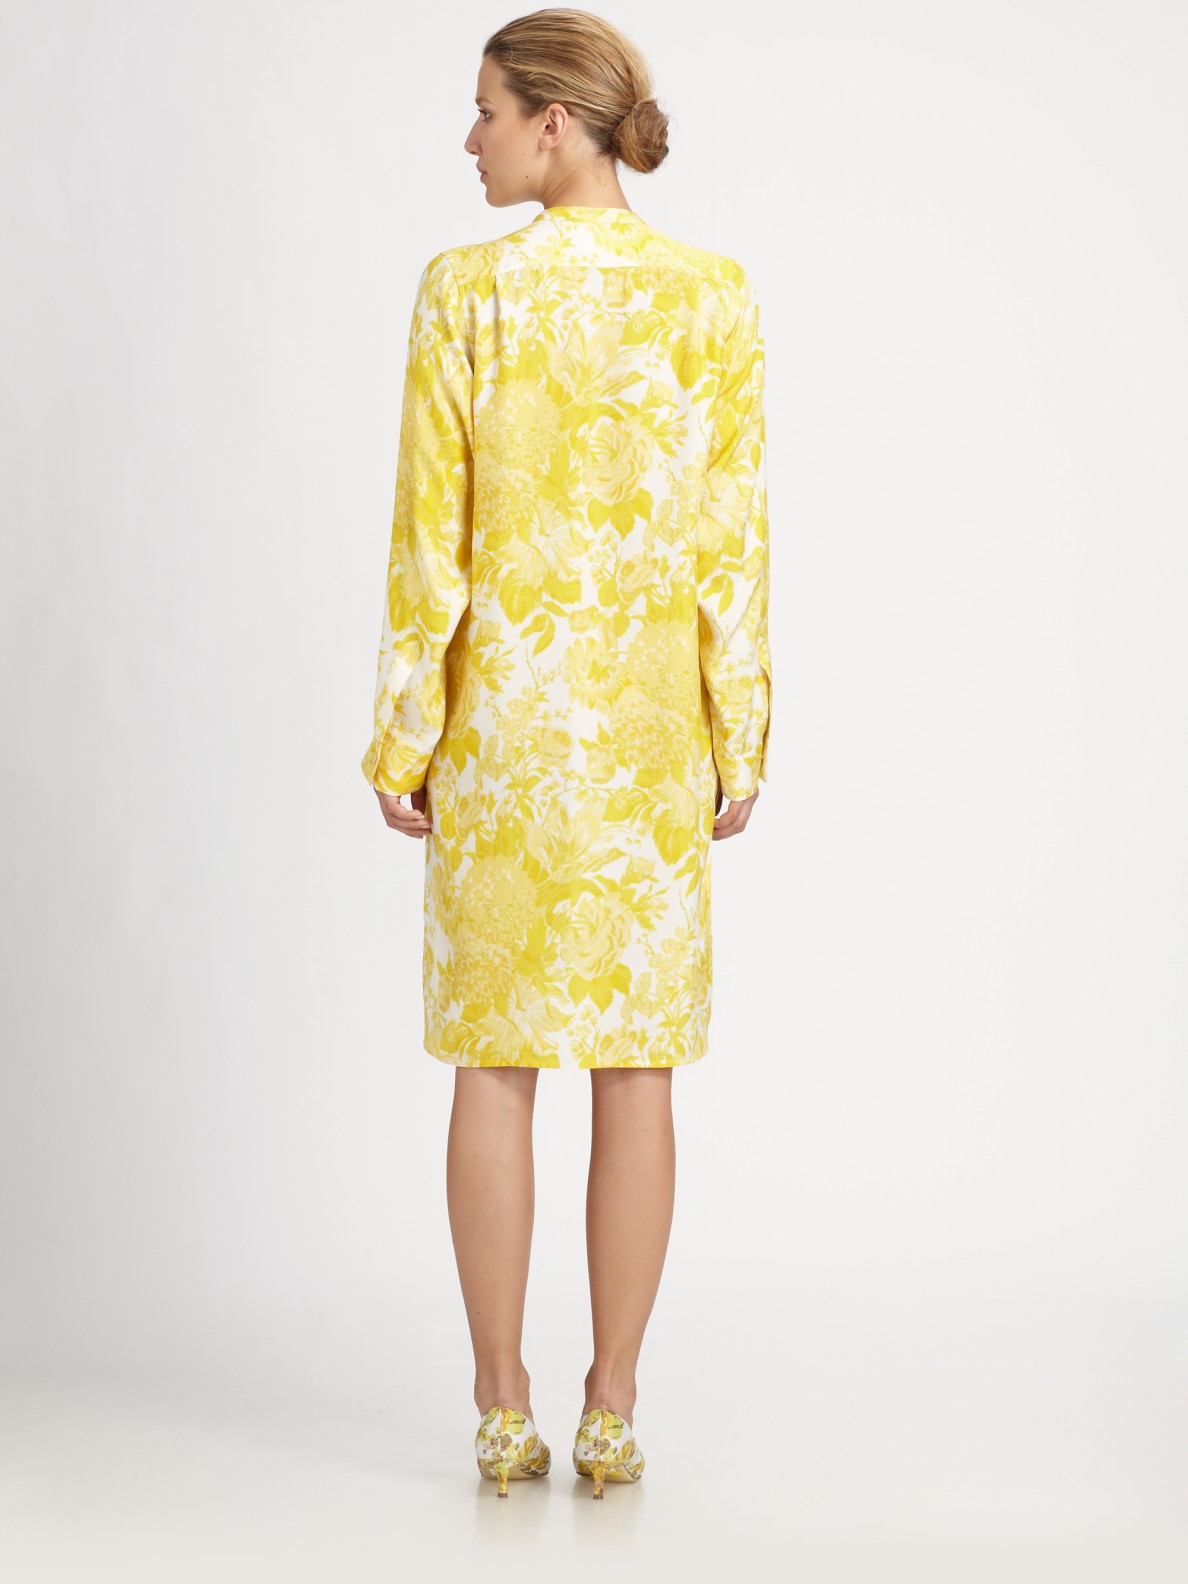 Lyst - Stella Mccartney Silk Floral Shirtdress in Yellow